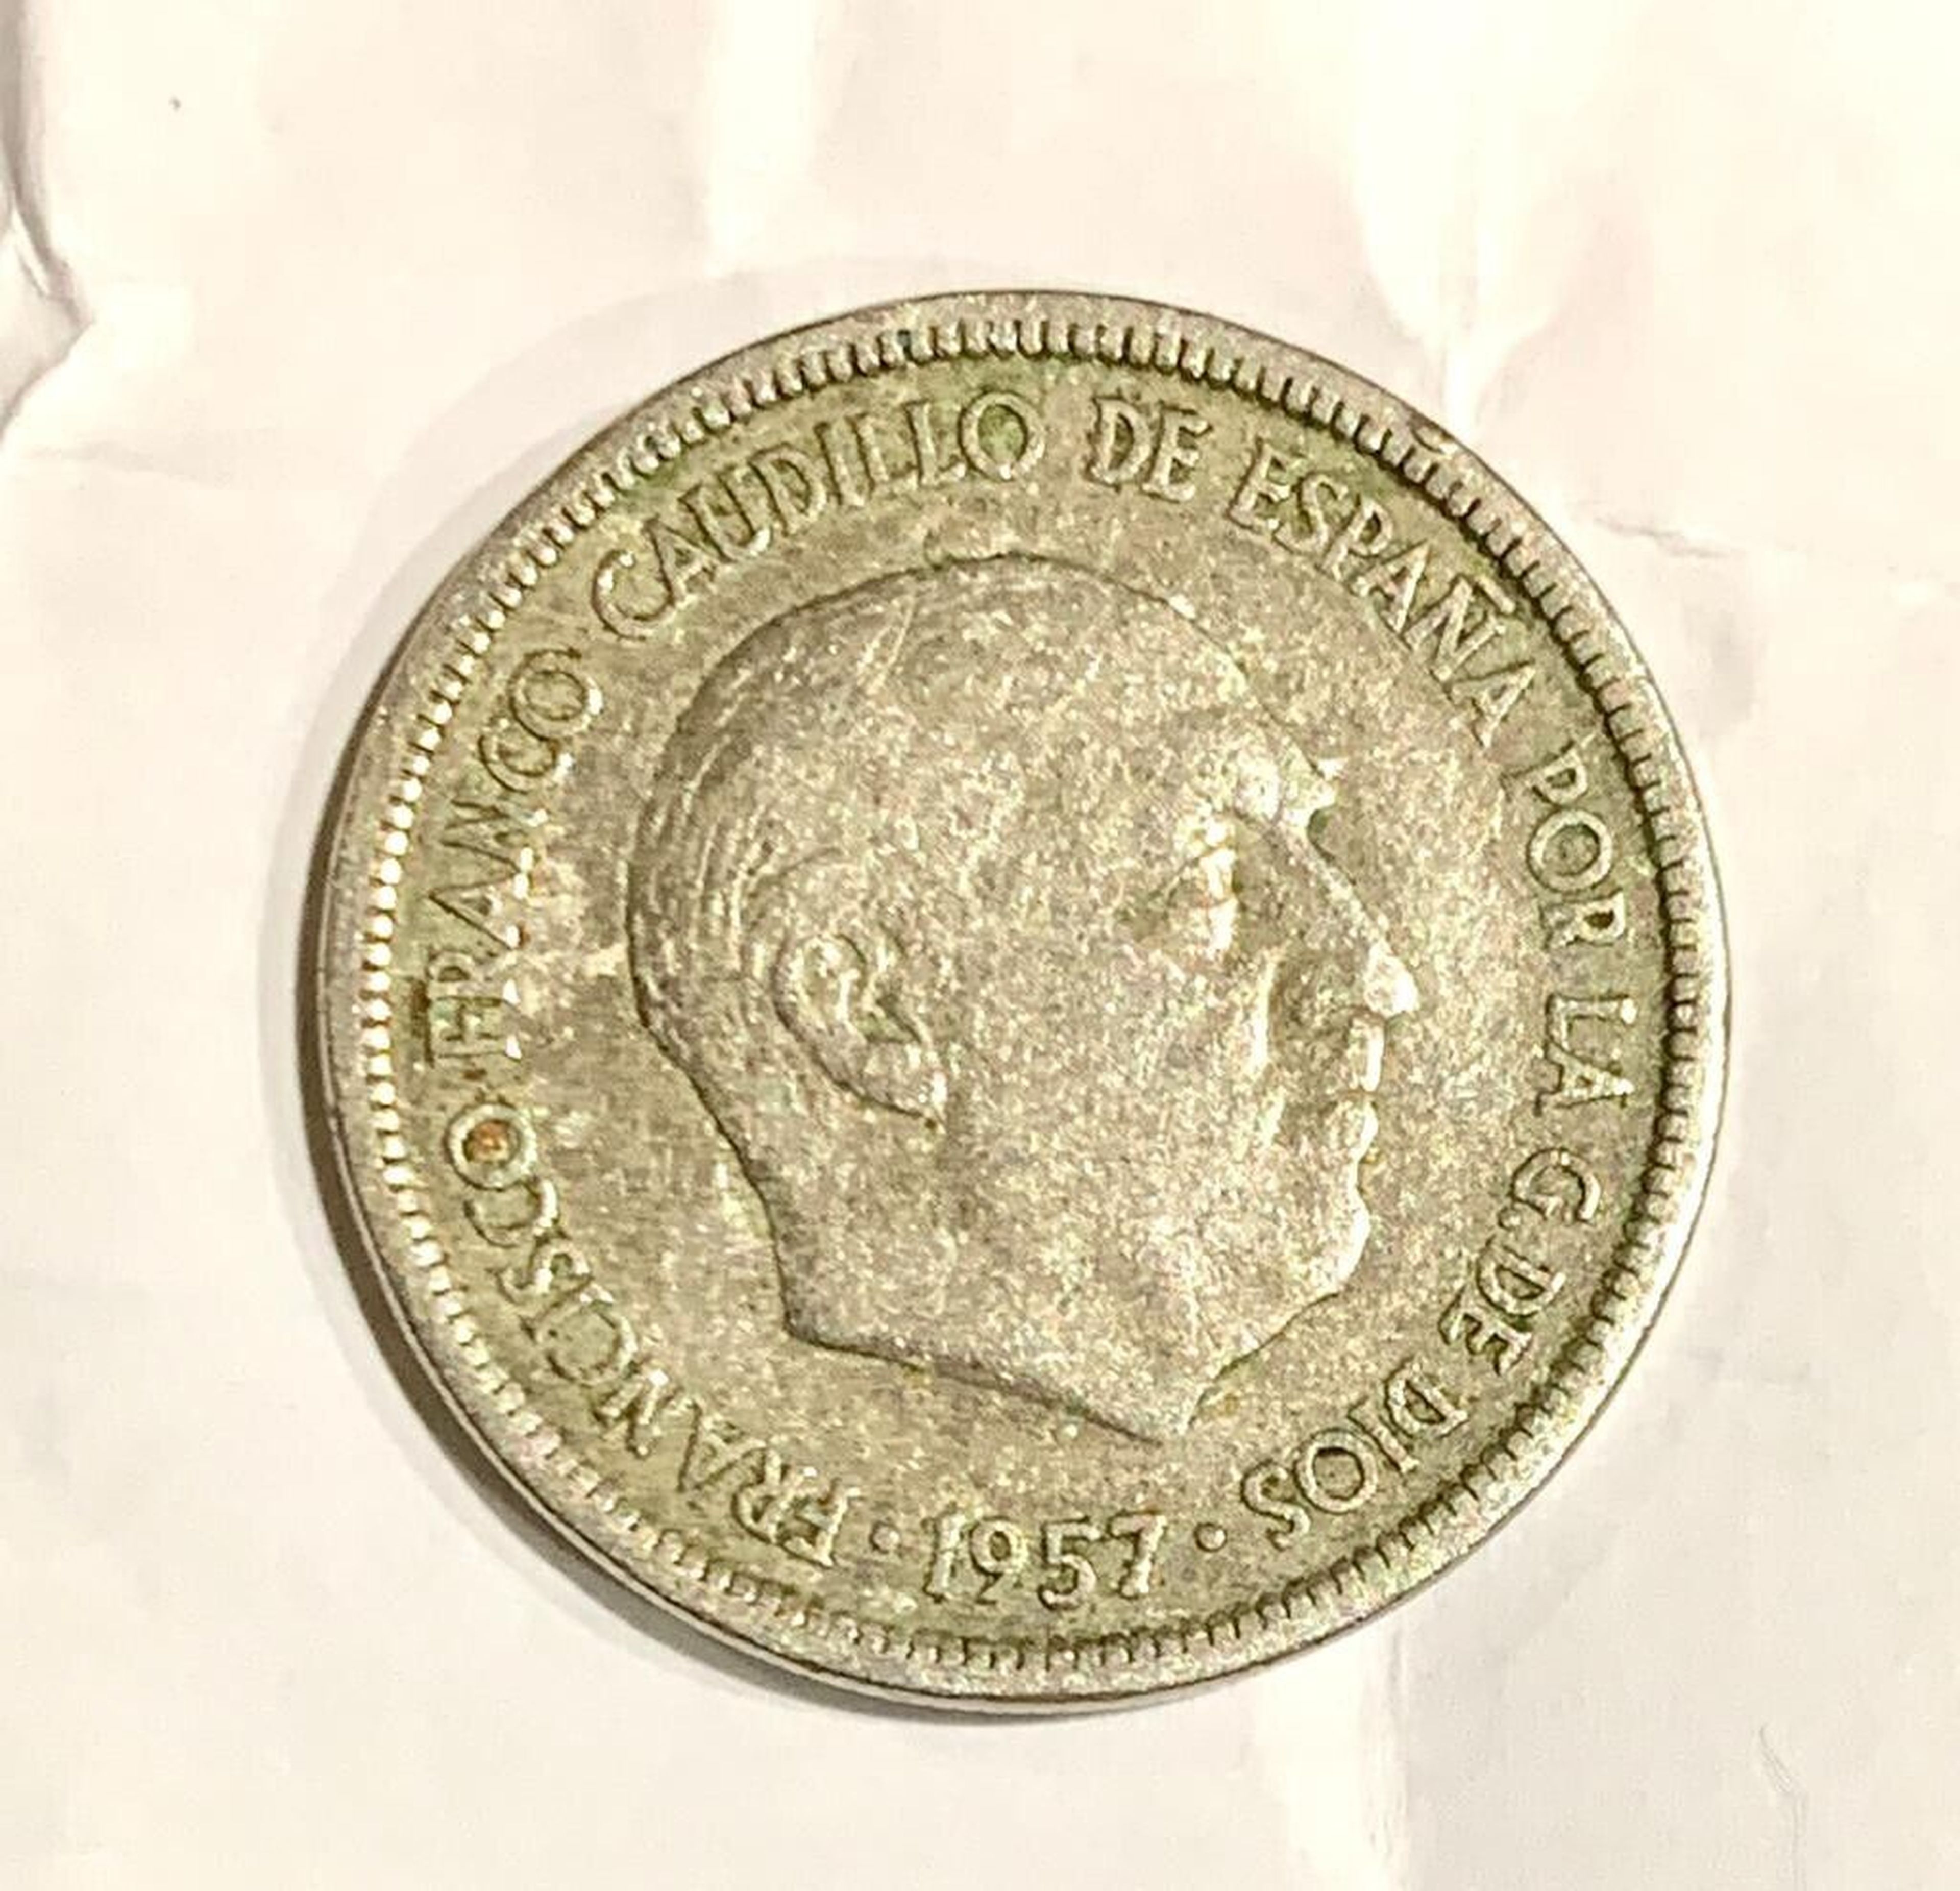 moneda de 5 pesetas de 1957 (cara de Franco)